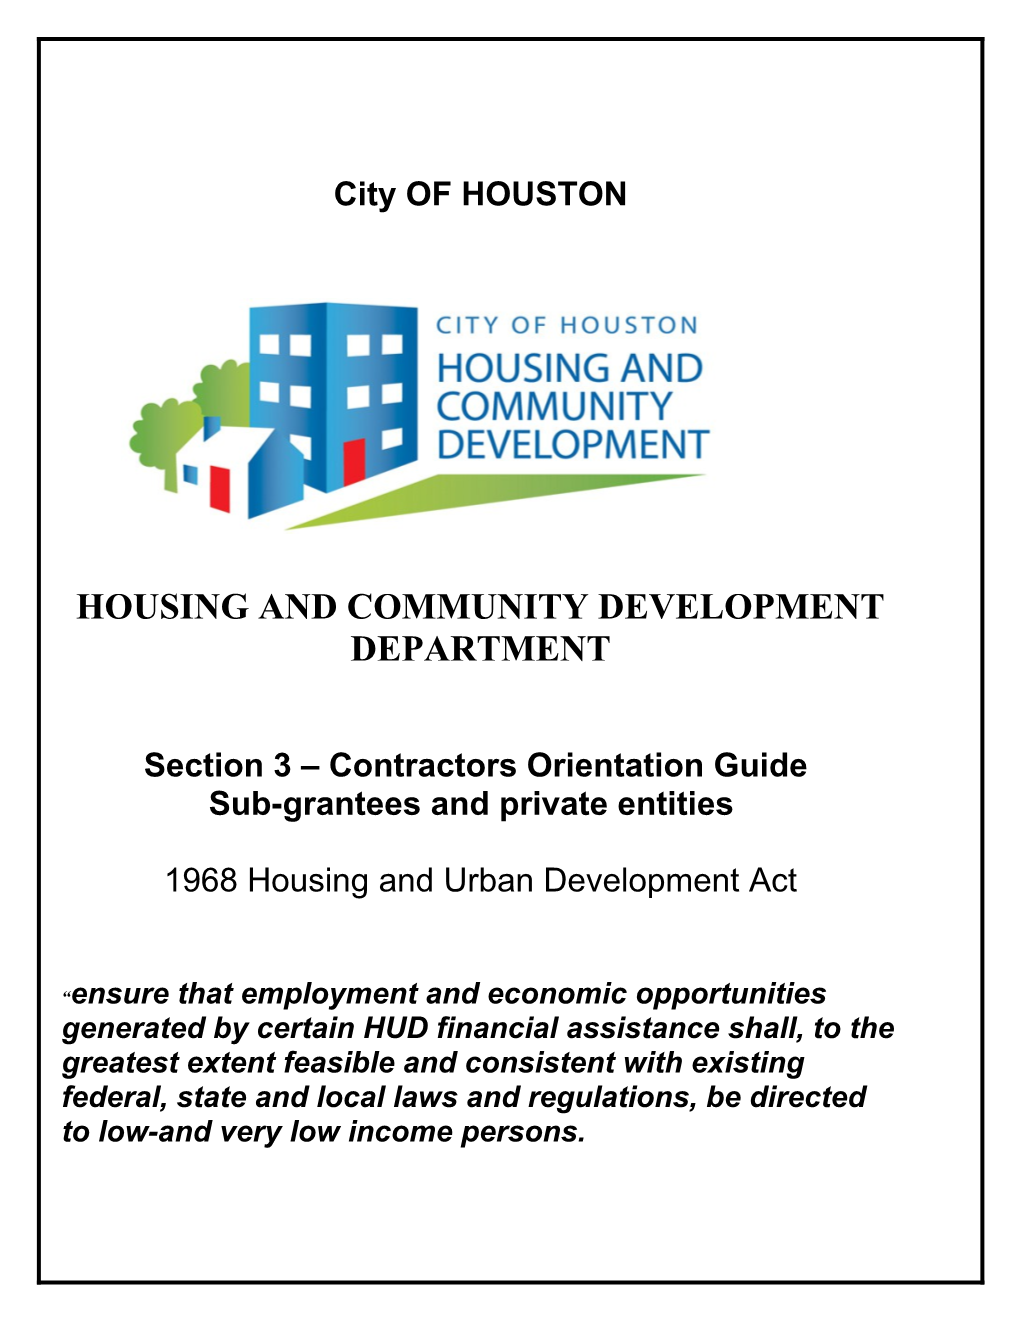 Housing and Community Development Department